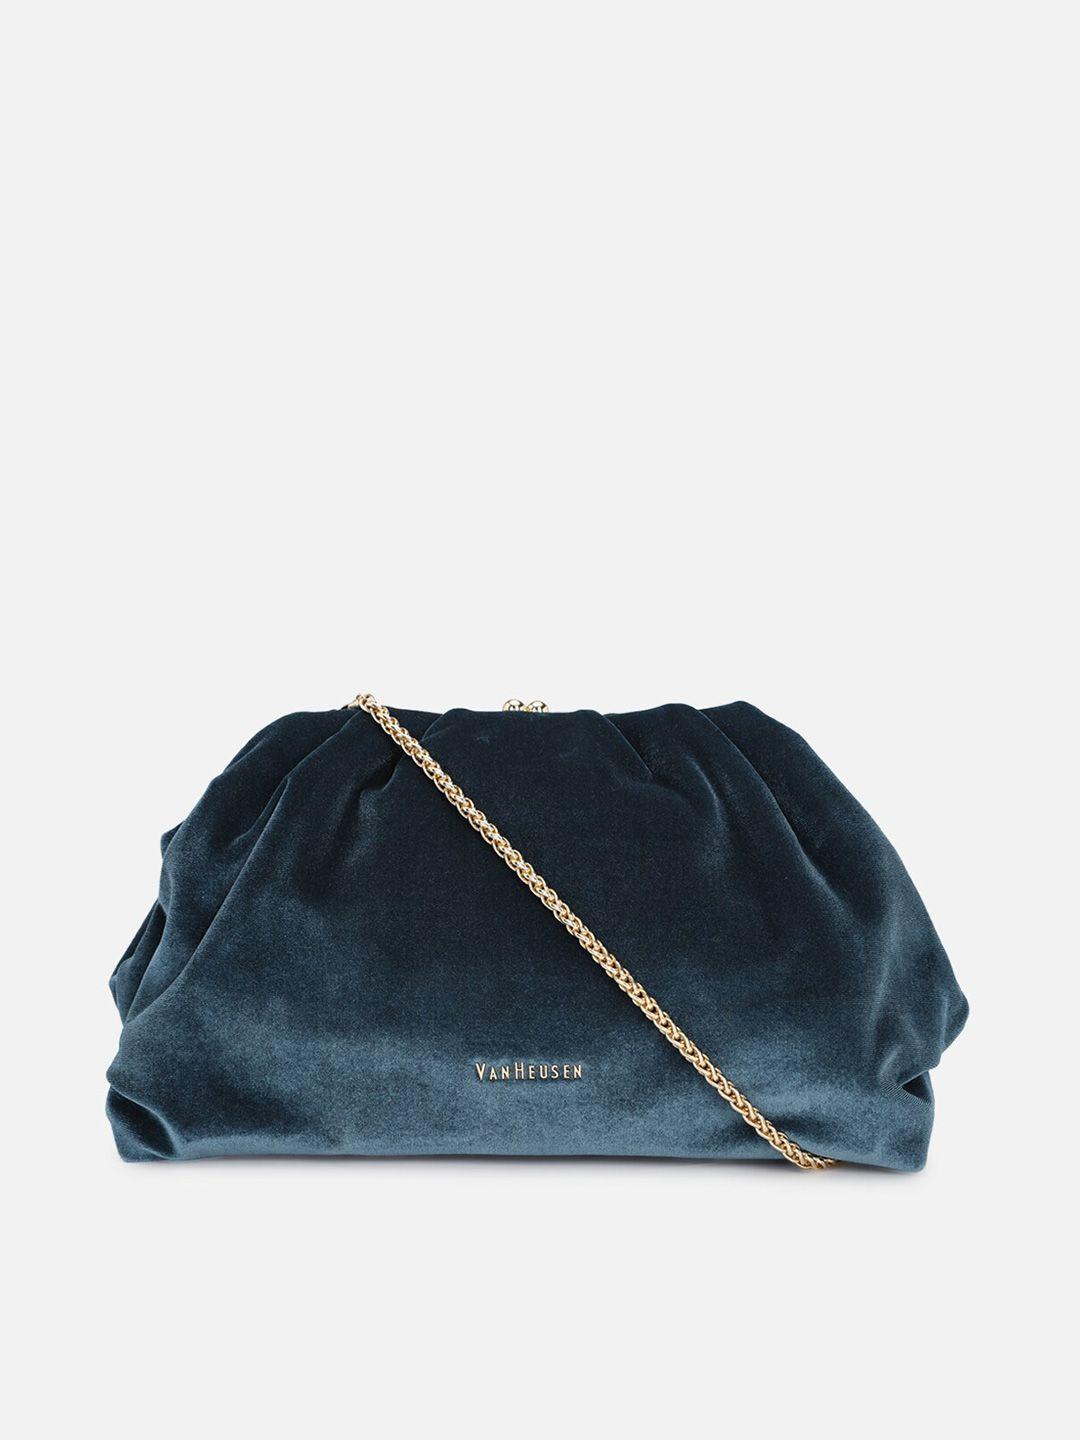 van heusen woman blue solid purse clutch